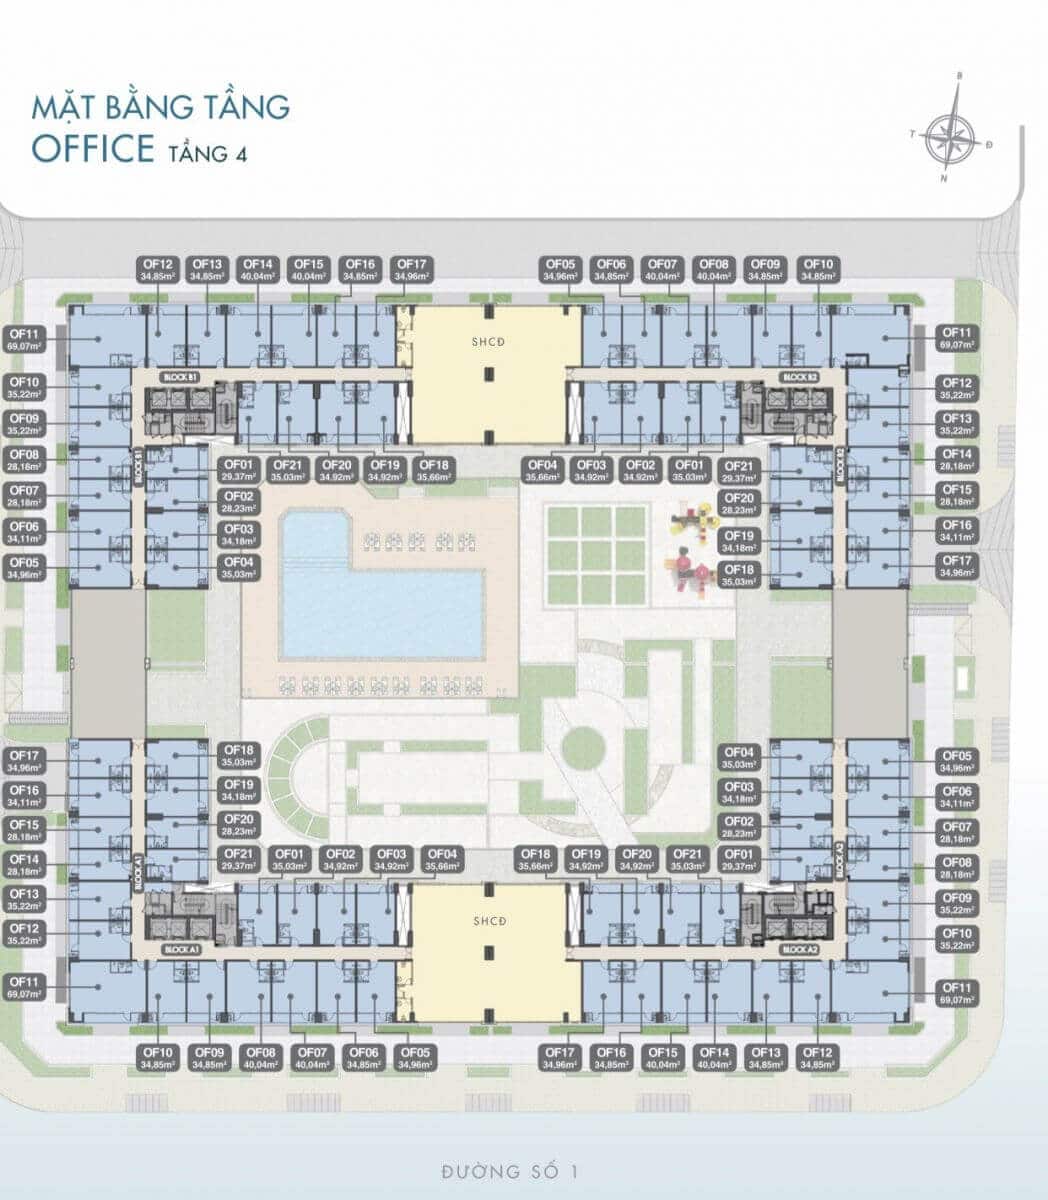 Mat Bang Can Officetel Q7 Boulevard Hung Thinh 2